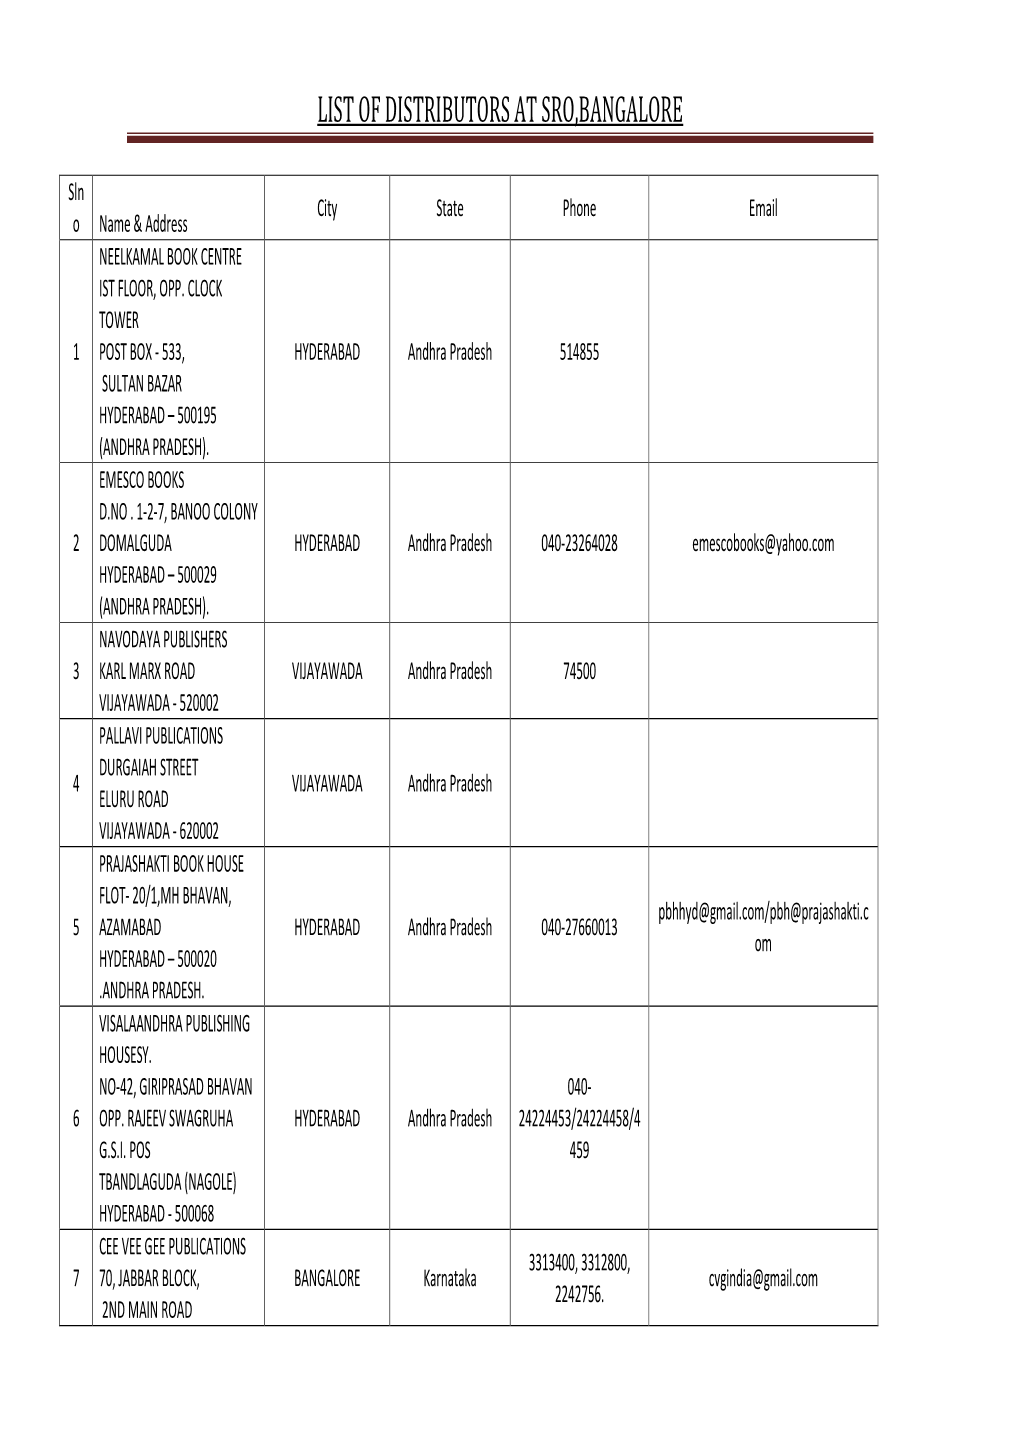 List of Distributors at Sro,Bangalore